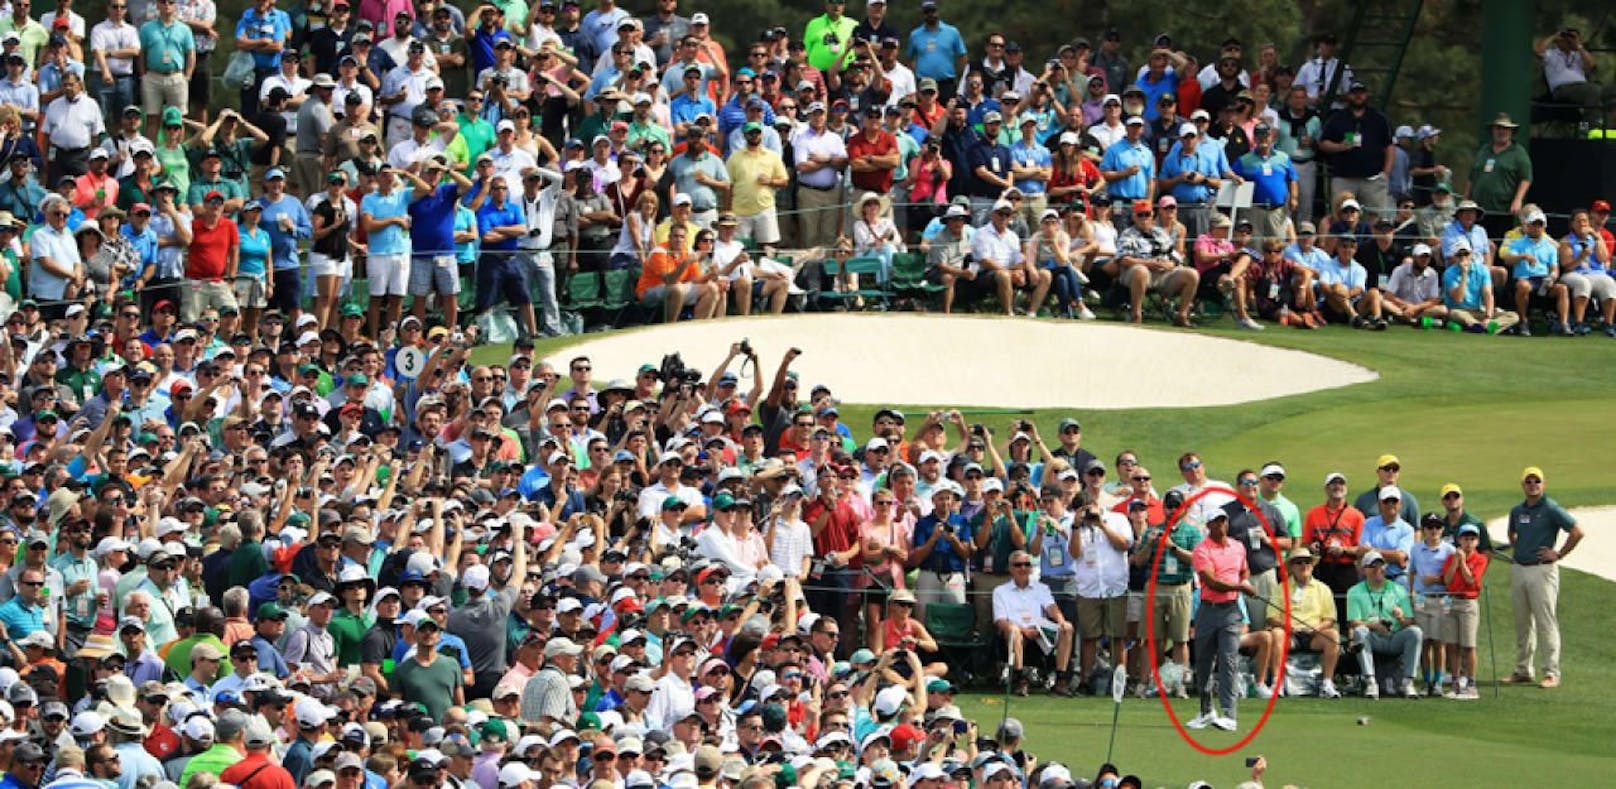 Foto-Beweis! Tiger Woods elektrisiert wieder die Fans